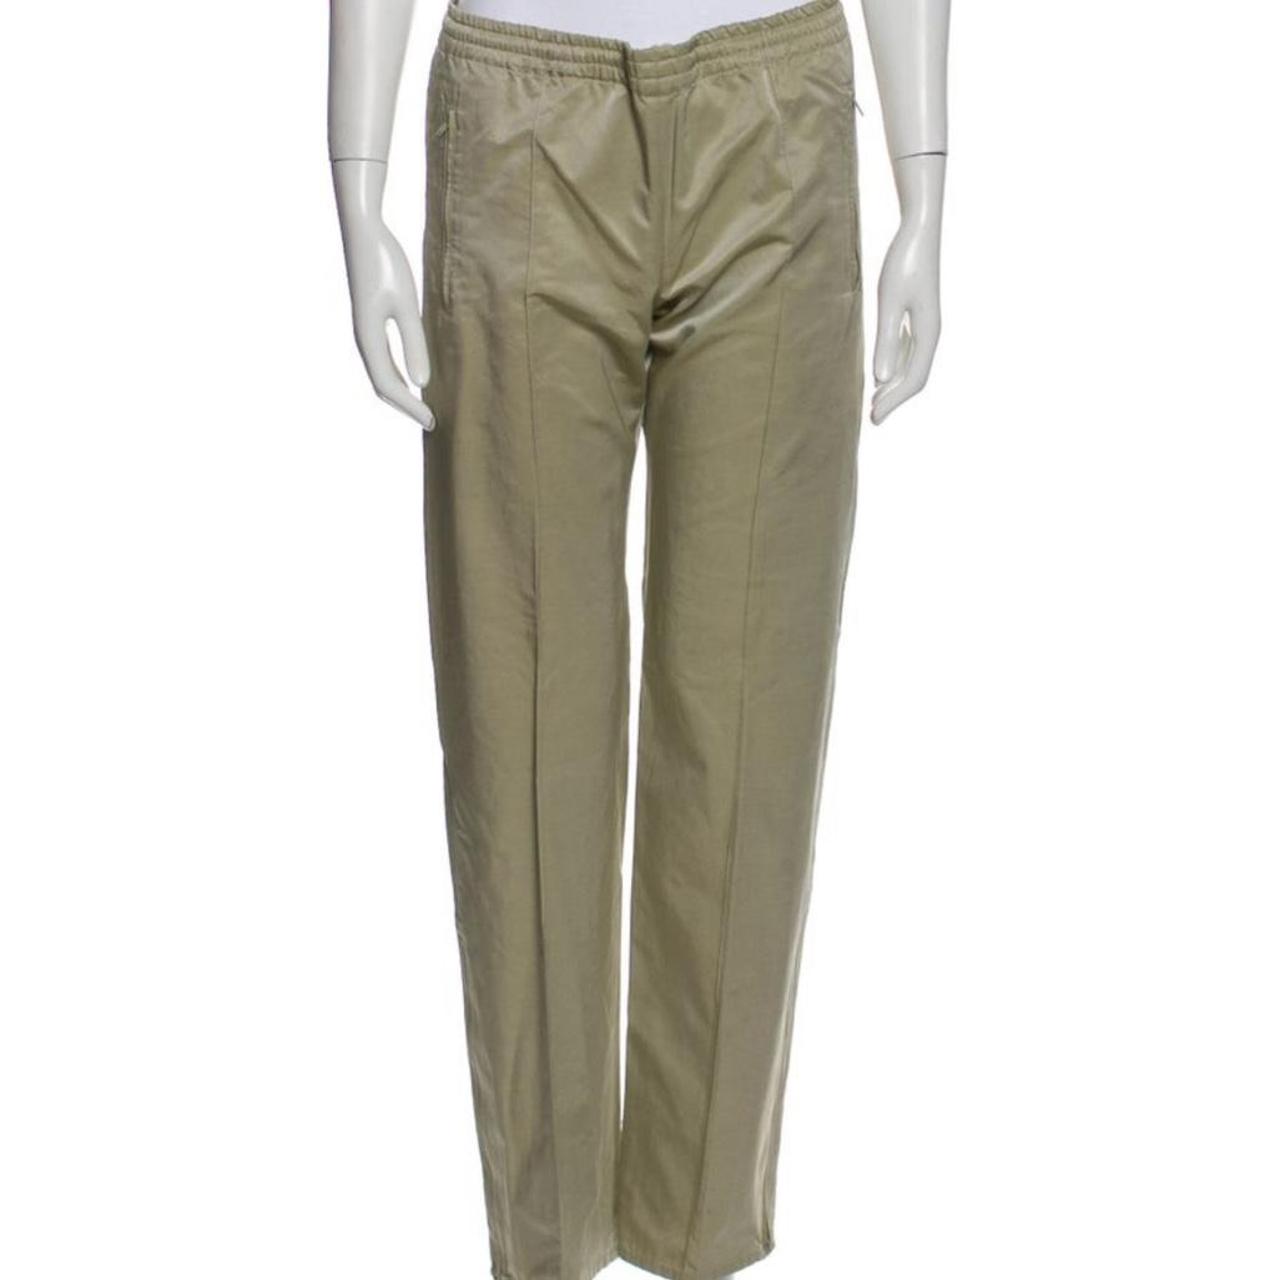 Sexy Goldish Greenish Tanish Track Pants Size XS... - Depop